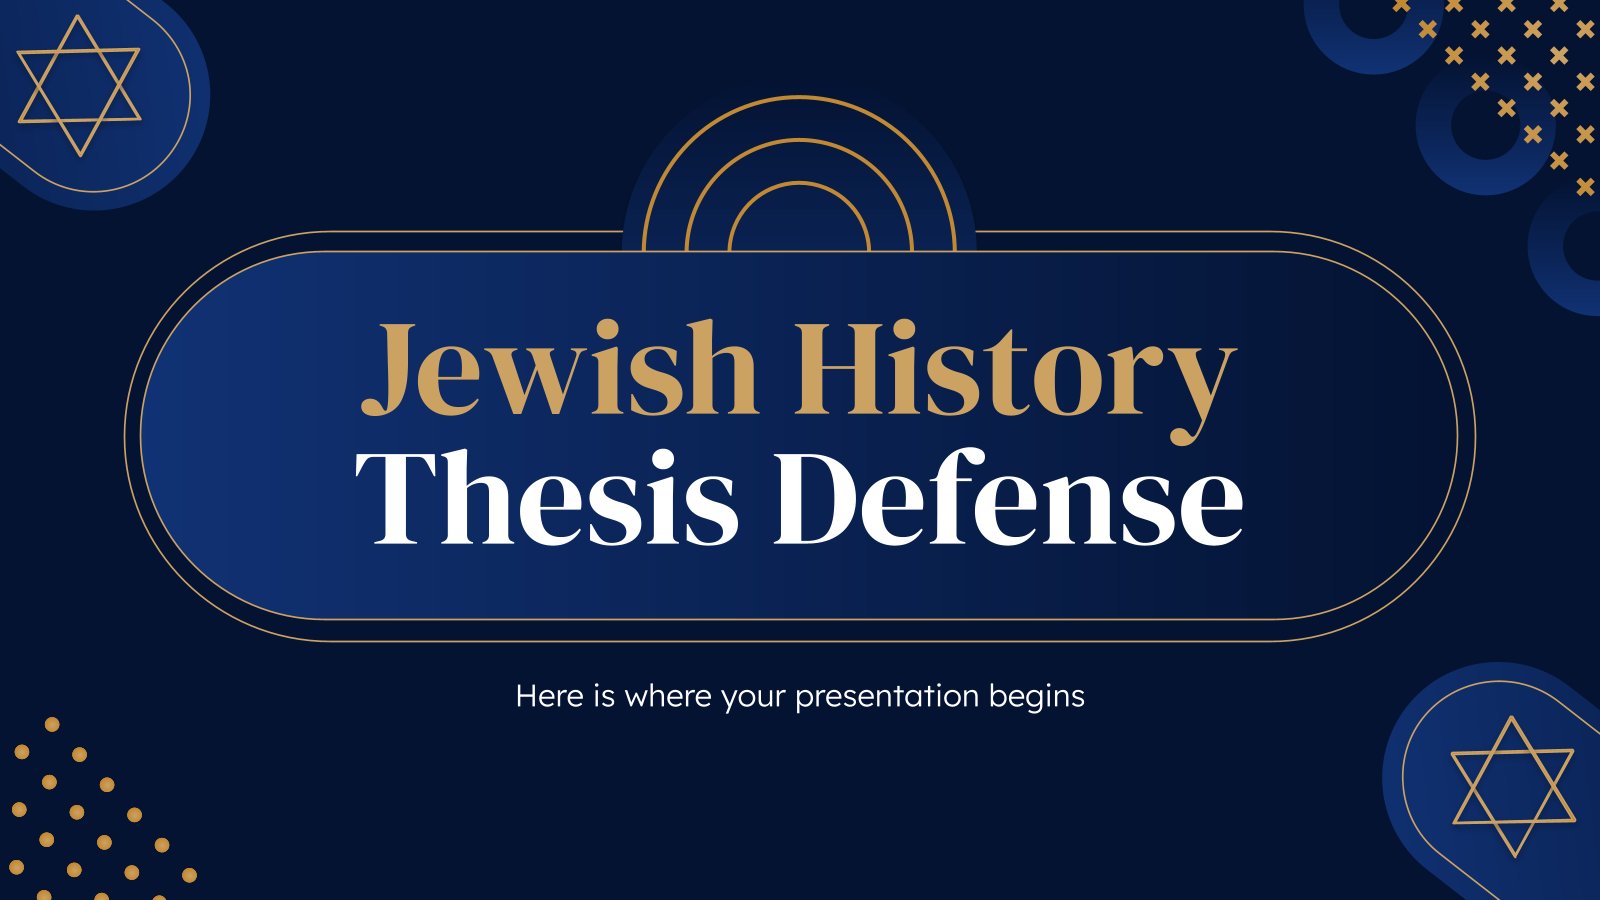 Jewish History Thesis Defense presentation template 